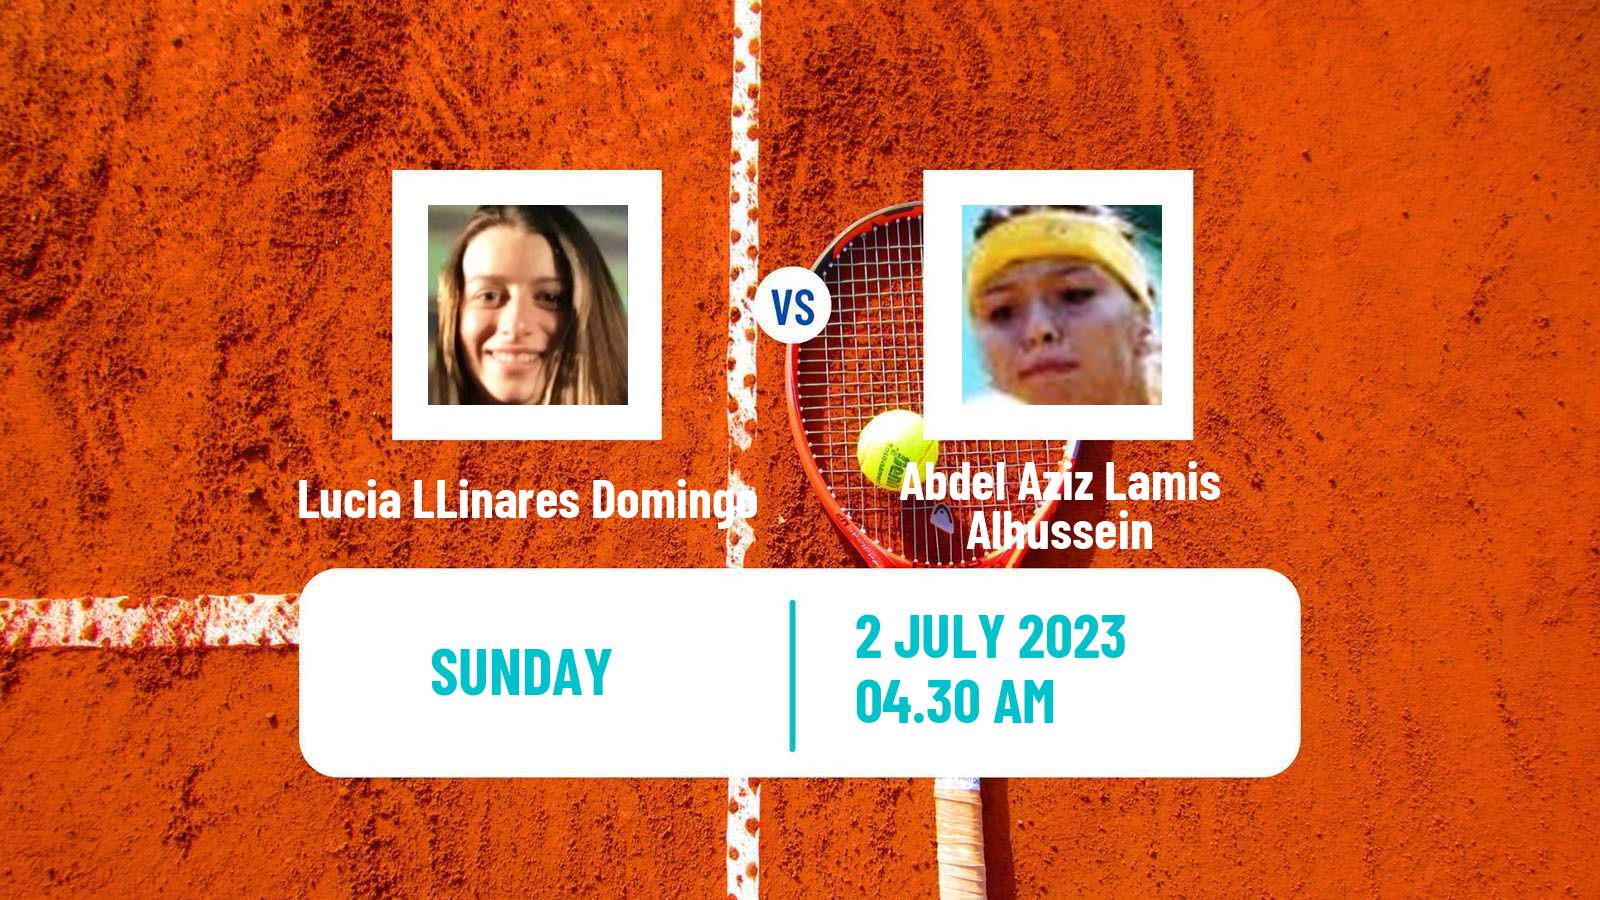 Tennis ITF W15 Monastir 21 Women Lucia LLinares Domingo - Abdel Aziz Lamis Alhussein